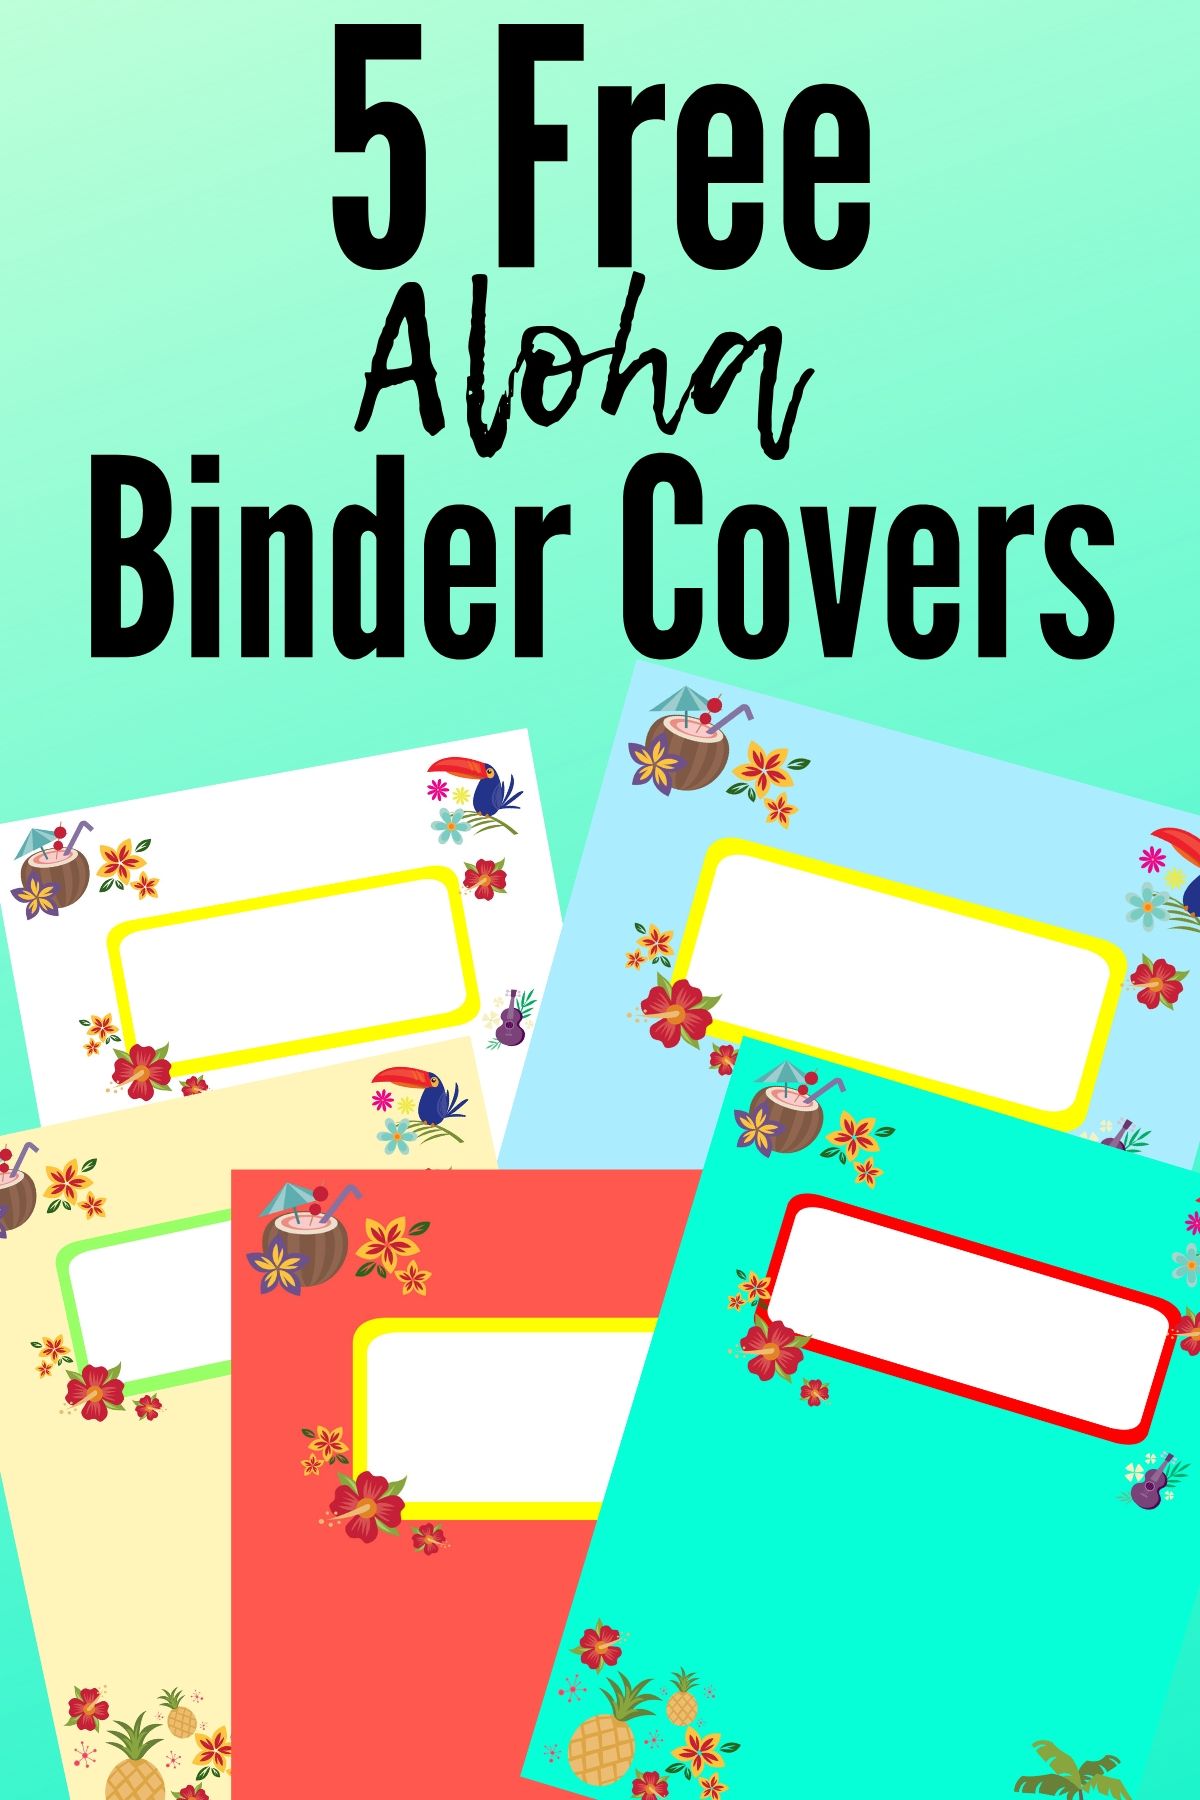 41-free-printable-binder-covers-the-peculiar-green-rose